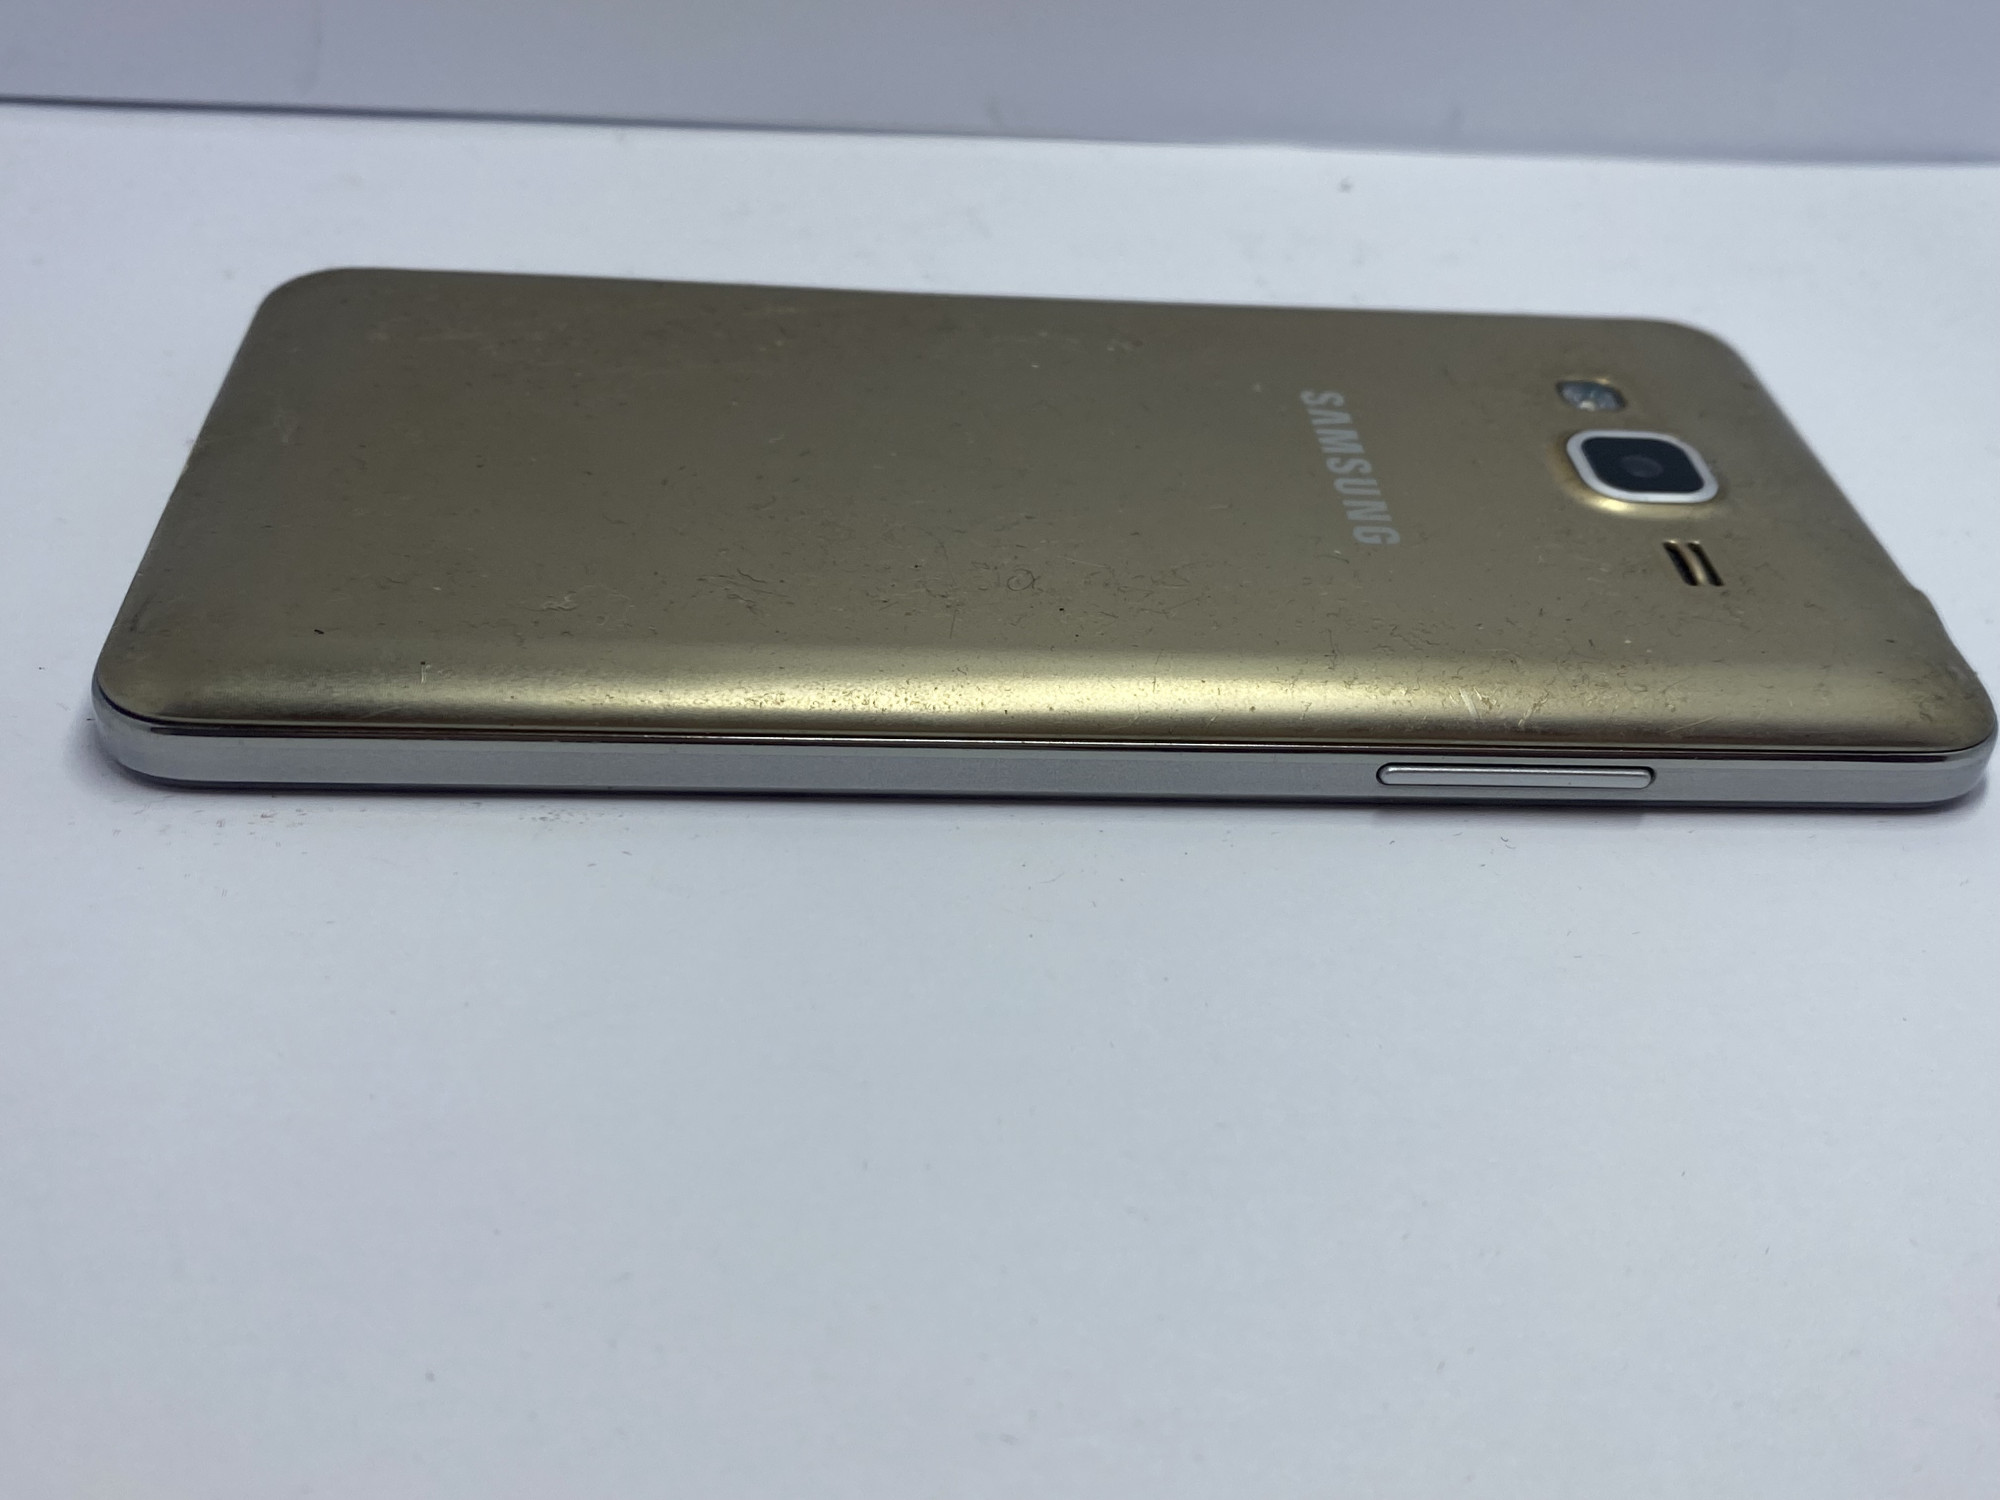 Samsung Galaxy Grand Prime VE (SM-G531H) 1/8Gb 4